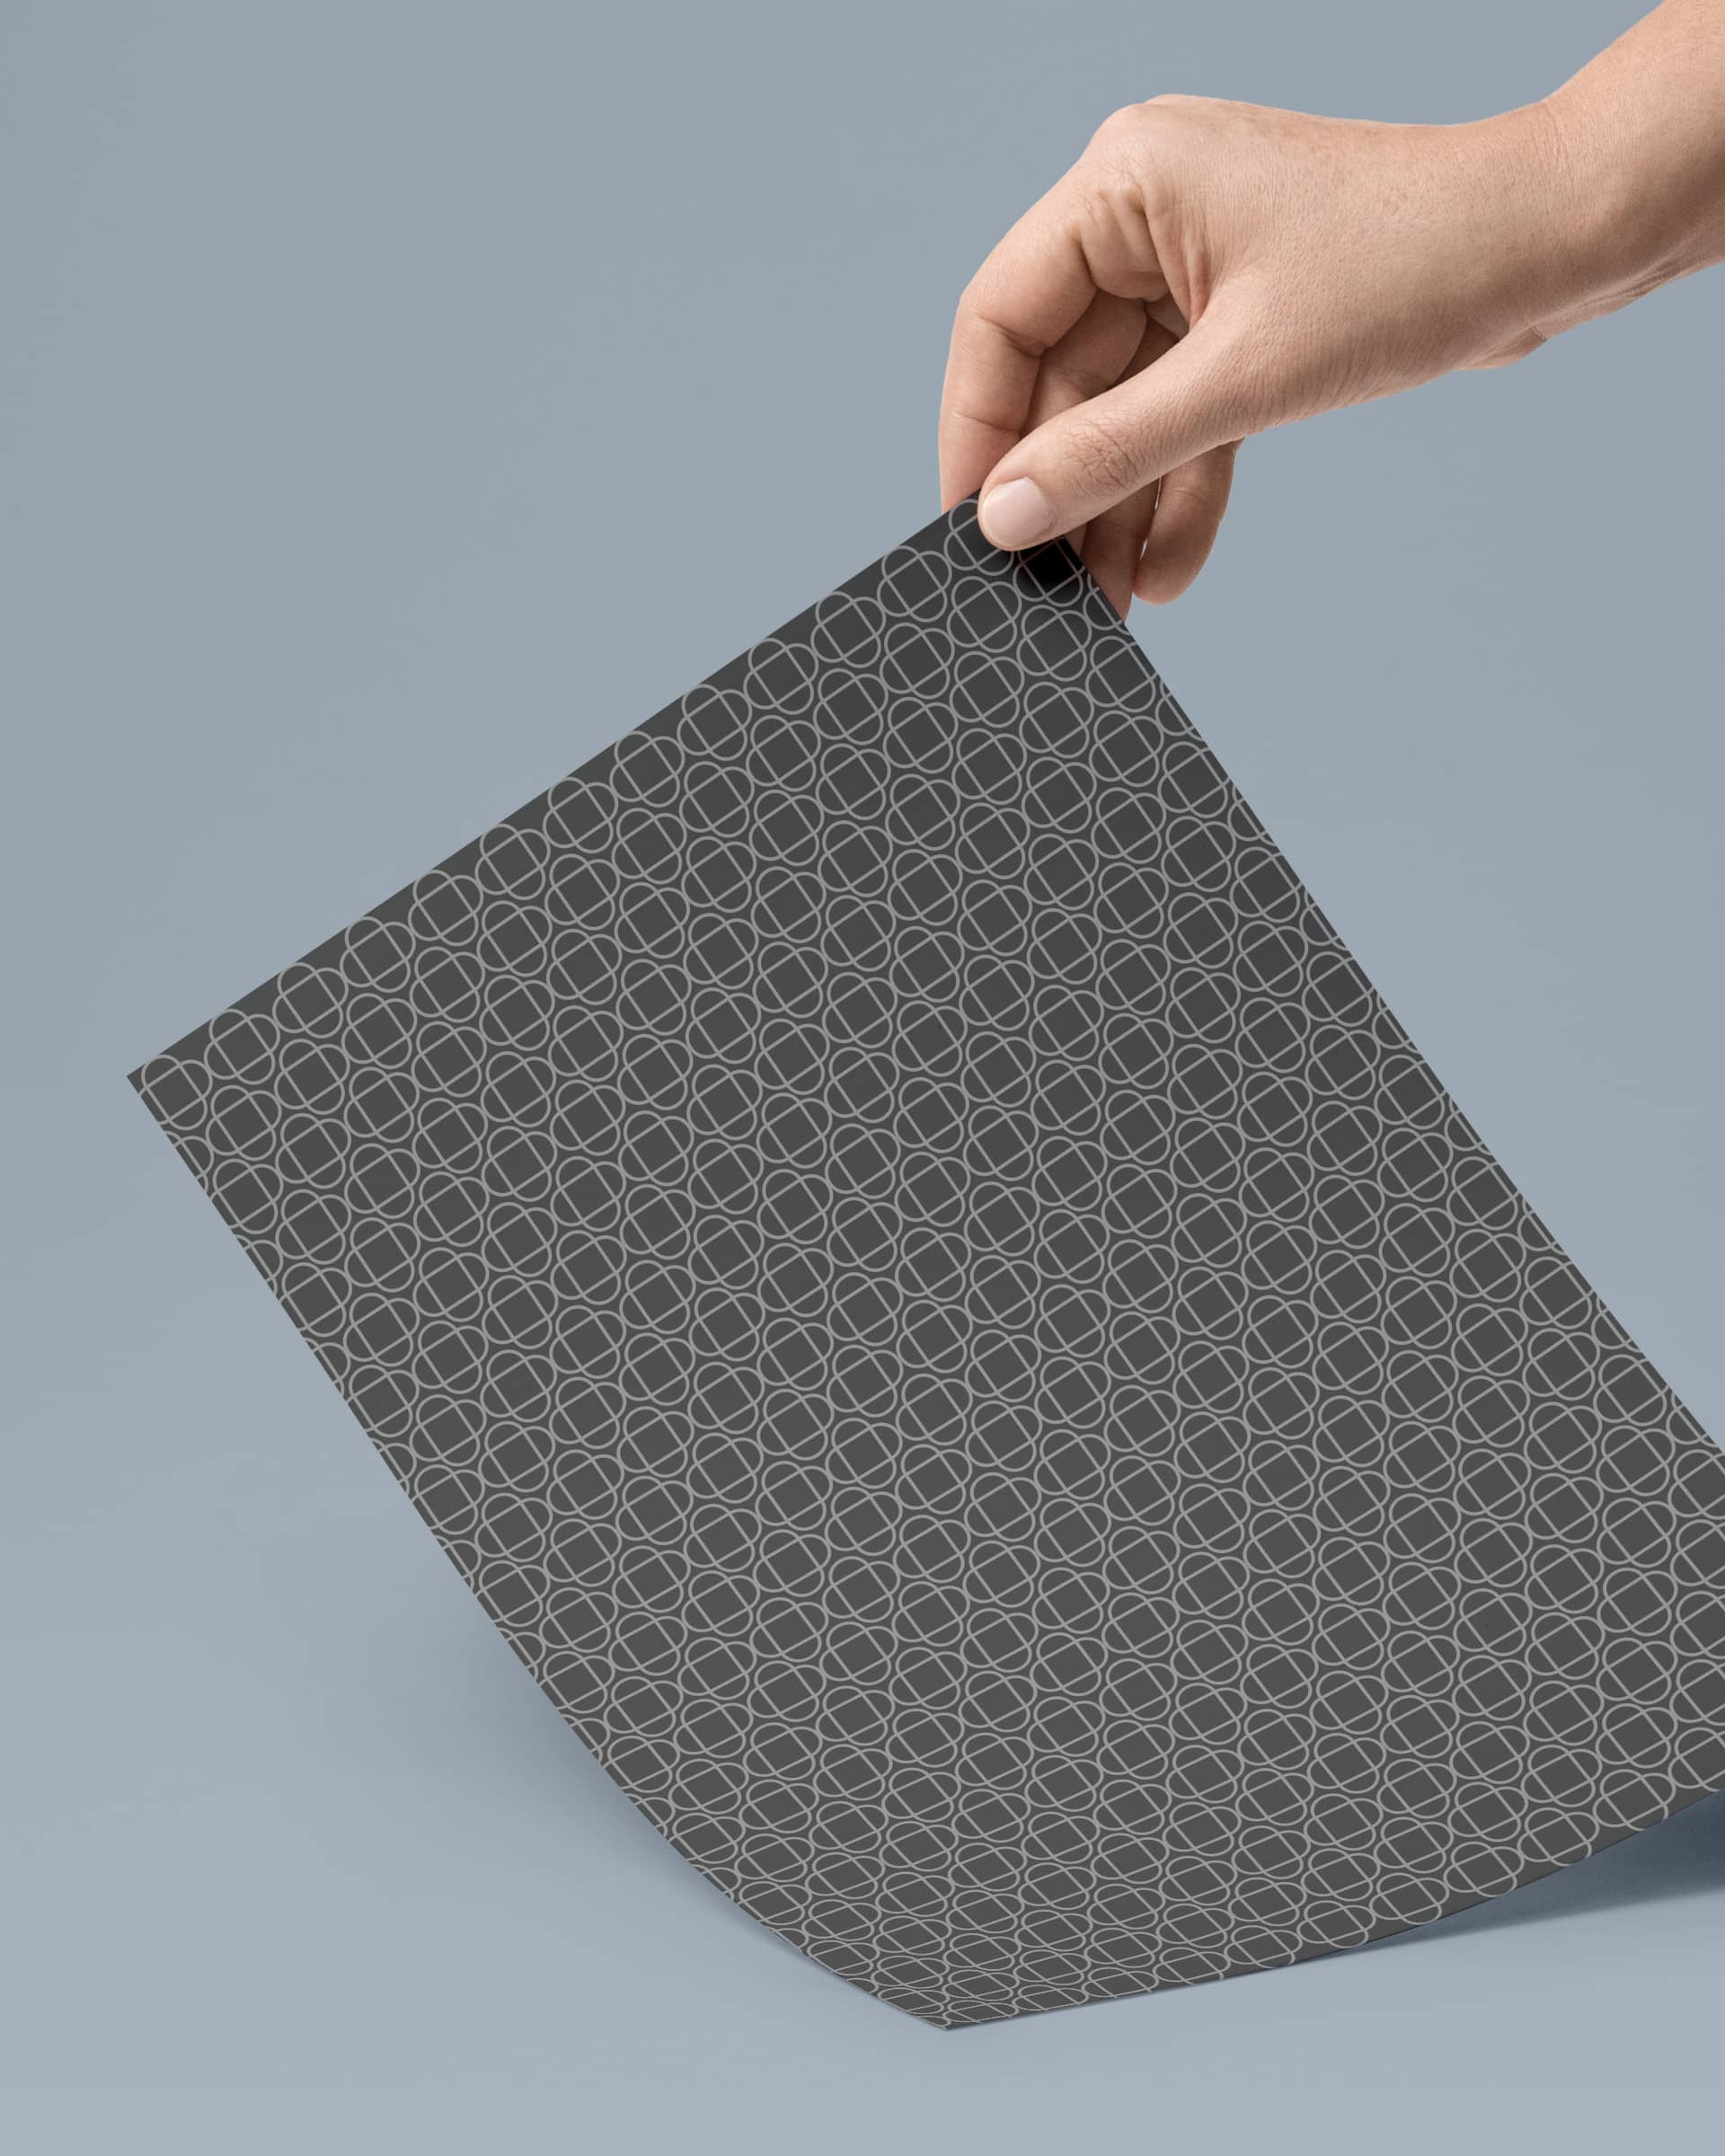 Dark grey geometrical pattern design printed on paper